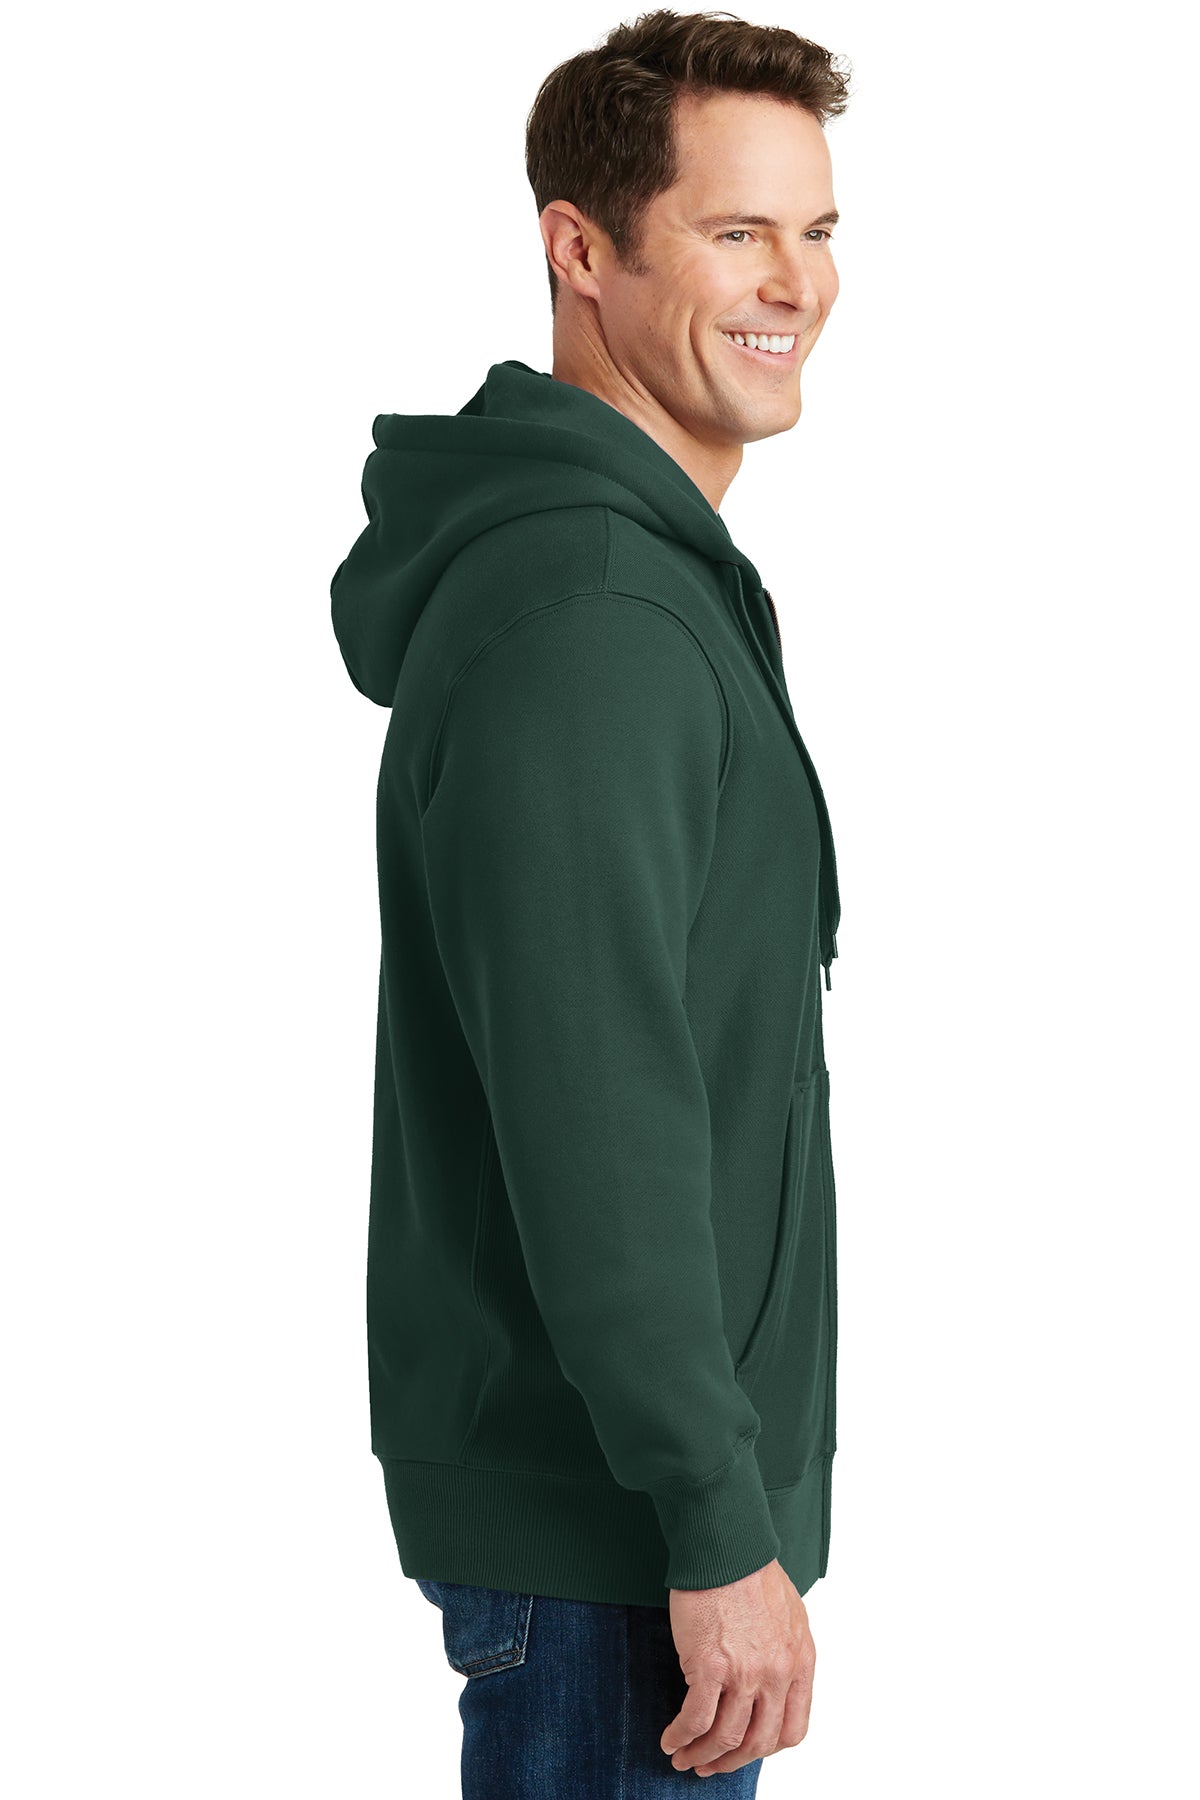 sport-tek_f282 _dark green_company_logo_sweatshirts